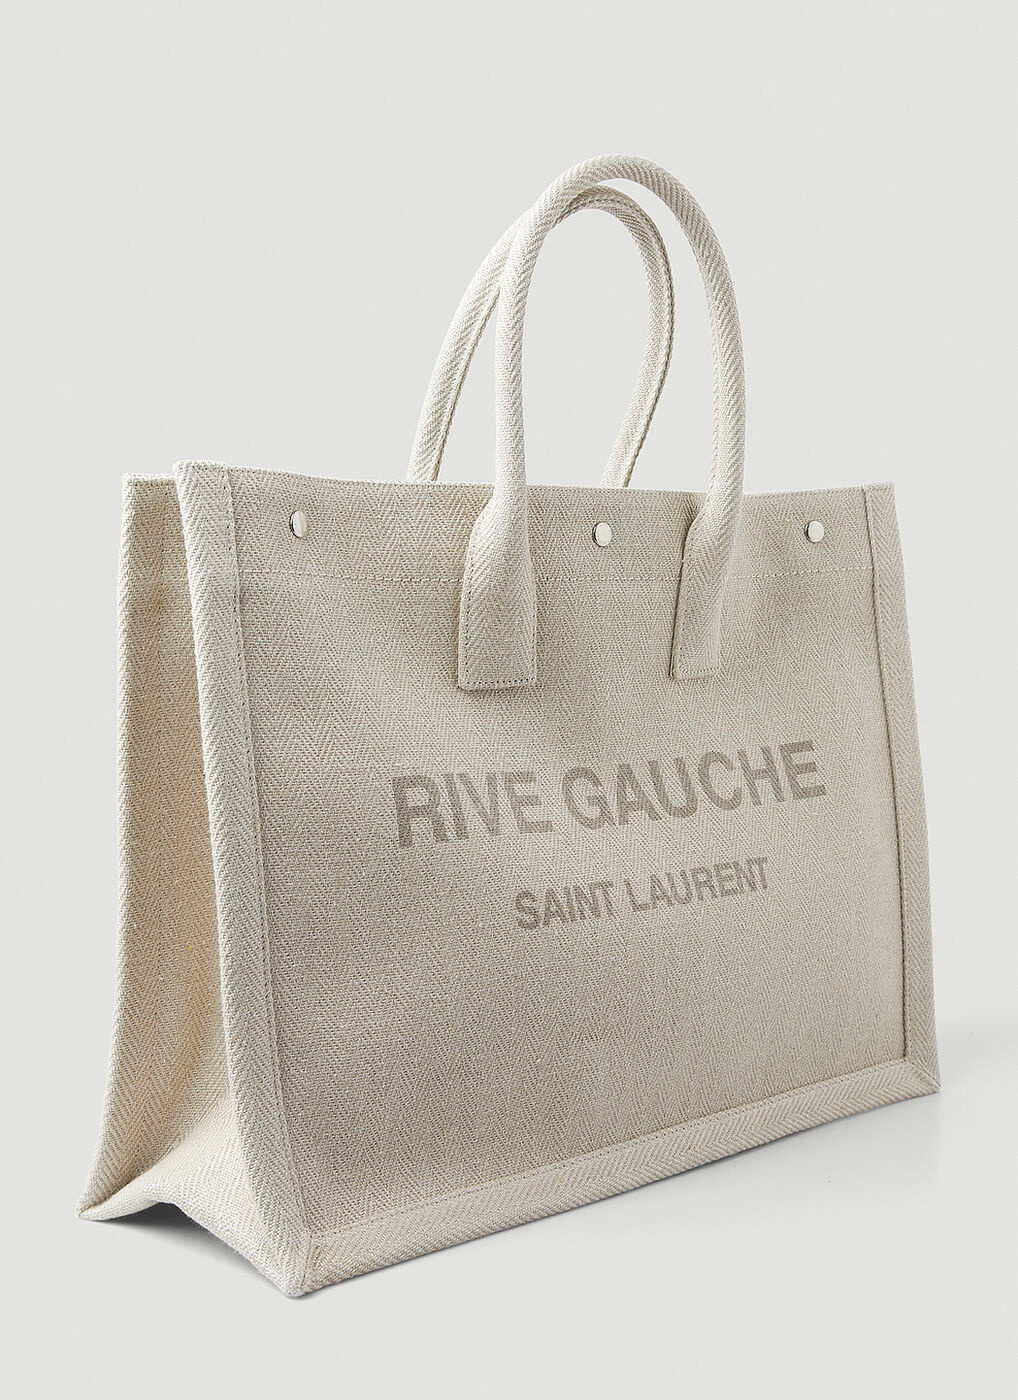  Rive Gauche Tote Bag Organizer, Rive Gauche Yves Tote Bag  Insert, Rive Gauche Tote Insert Handmade 3mm Premium Felt Snug Sturdy  Silver Zipper (For Large Rive Gauche N/S, Beige) : Handmade